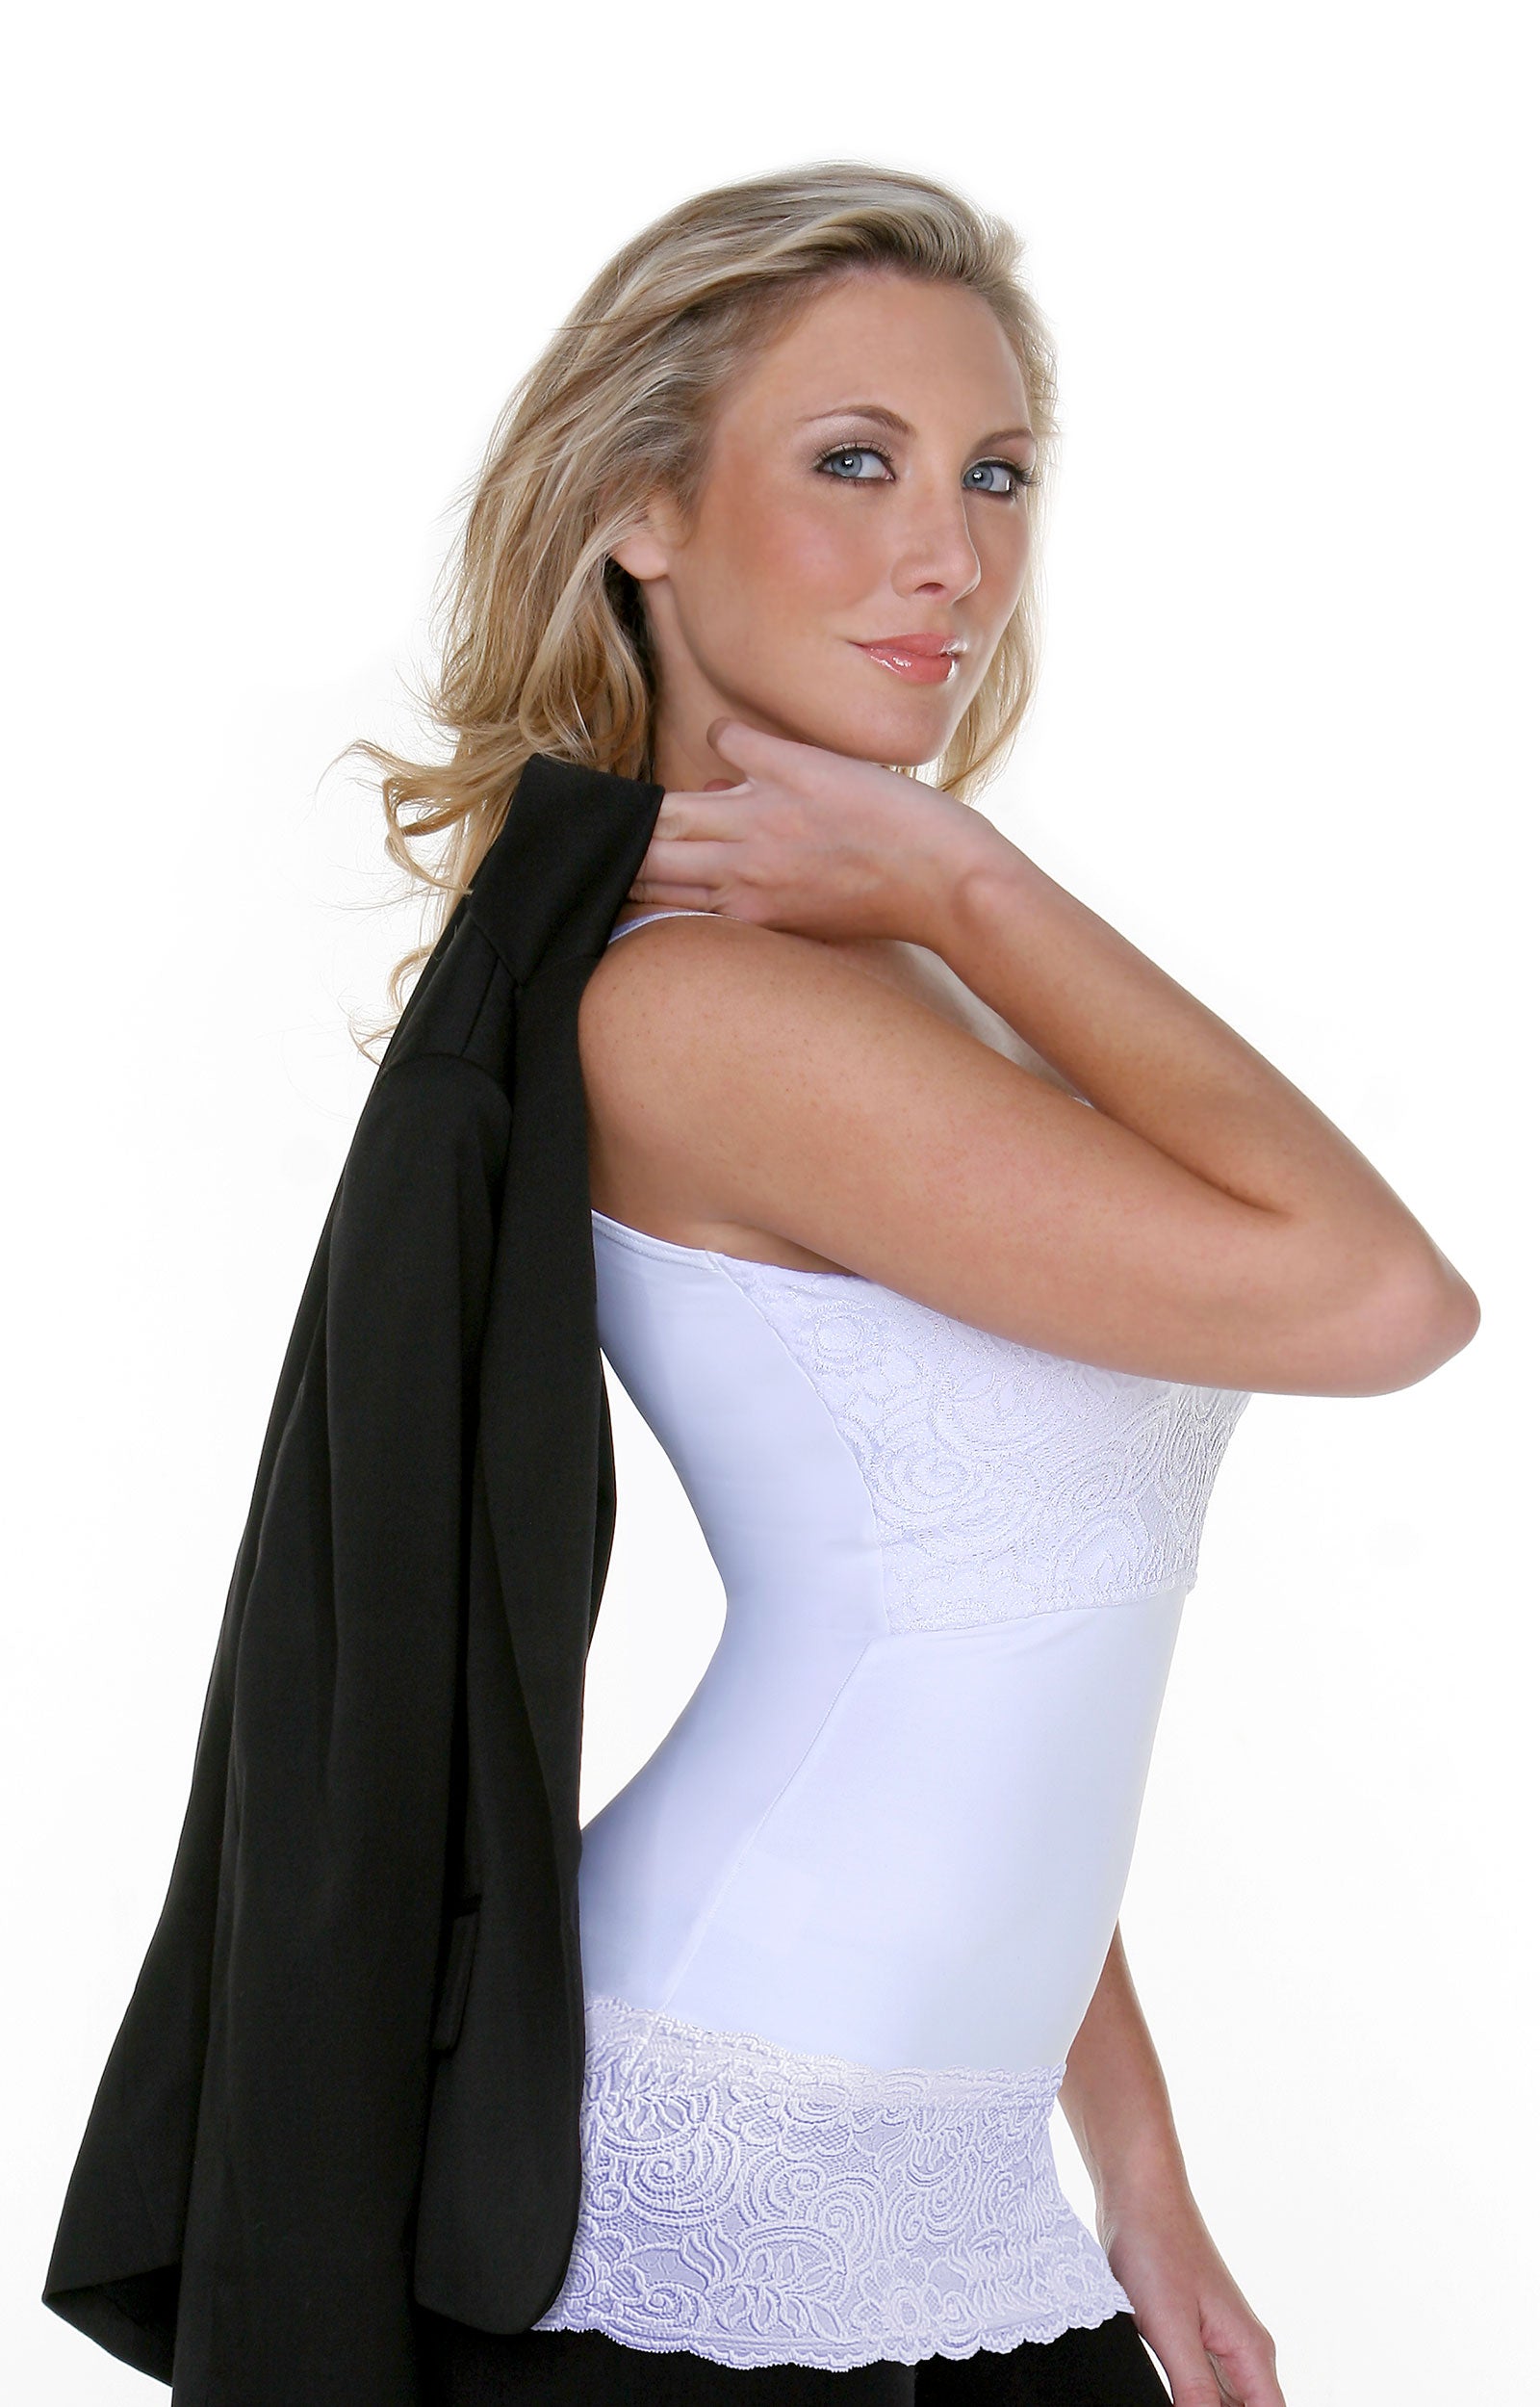 Women's Full Lace Black Camisole Bra